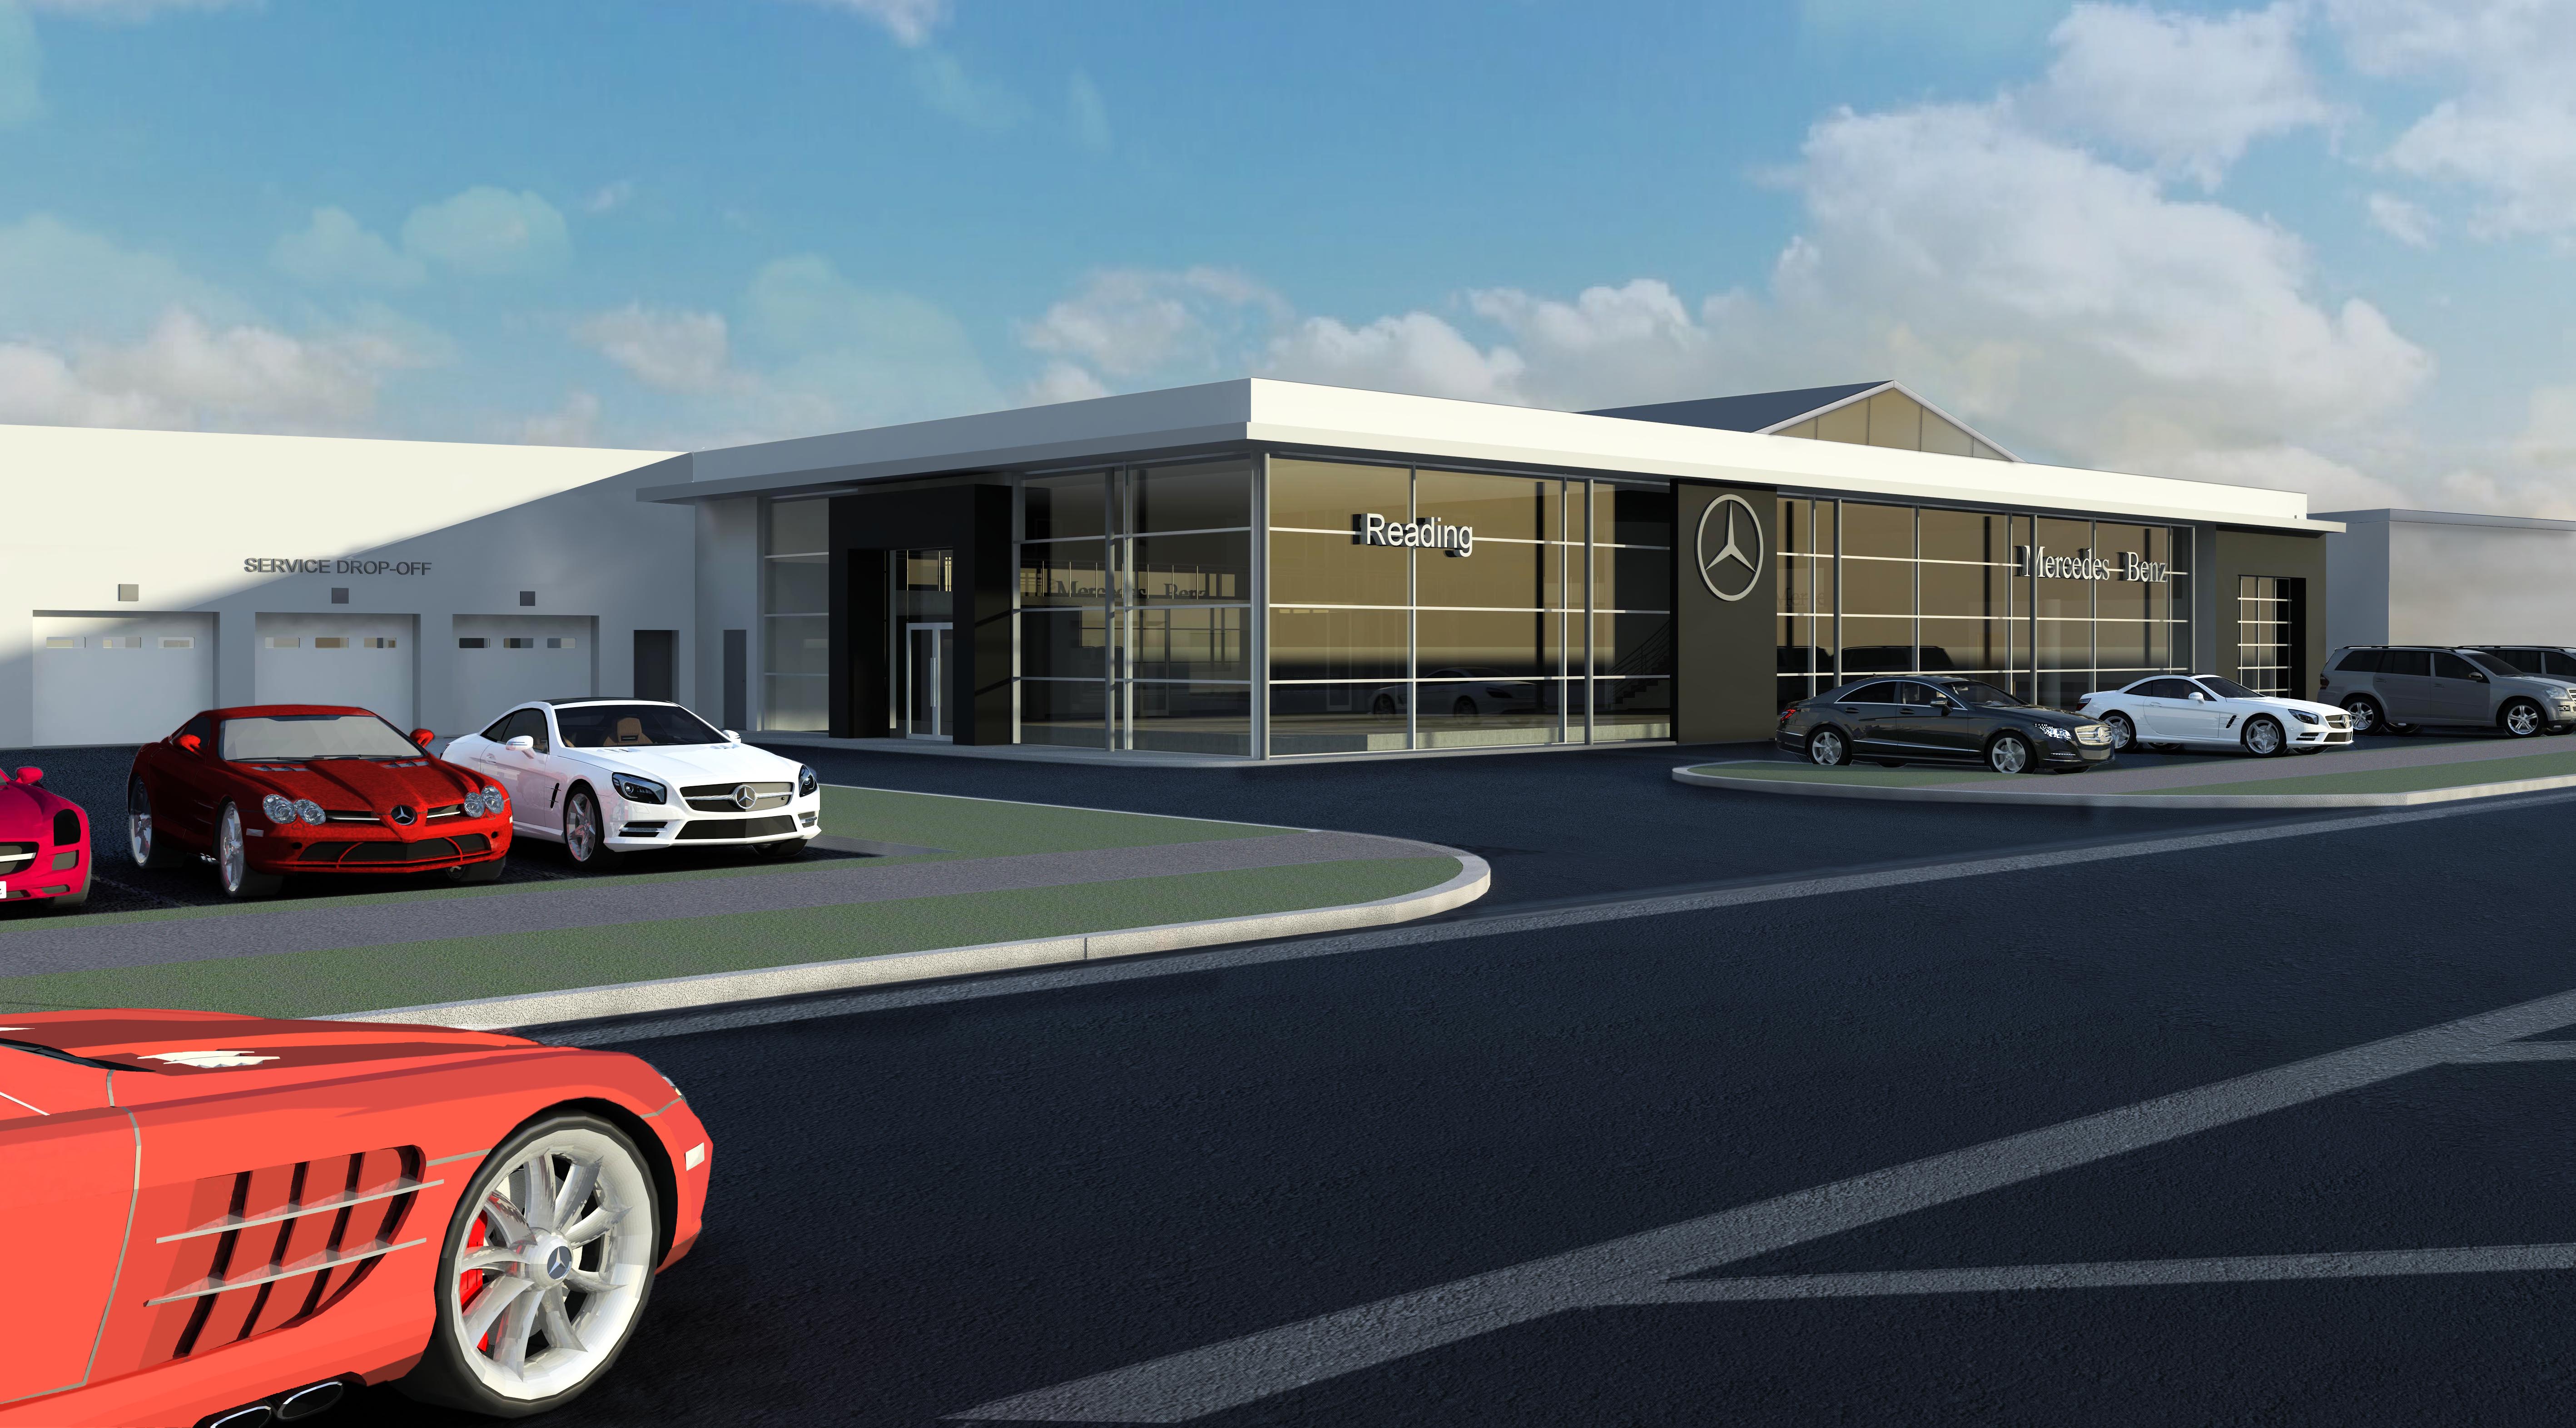 Vertu Motors invests £4.7 million in Mercedes-Benz Reading 